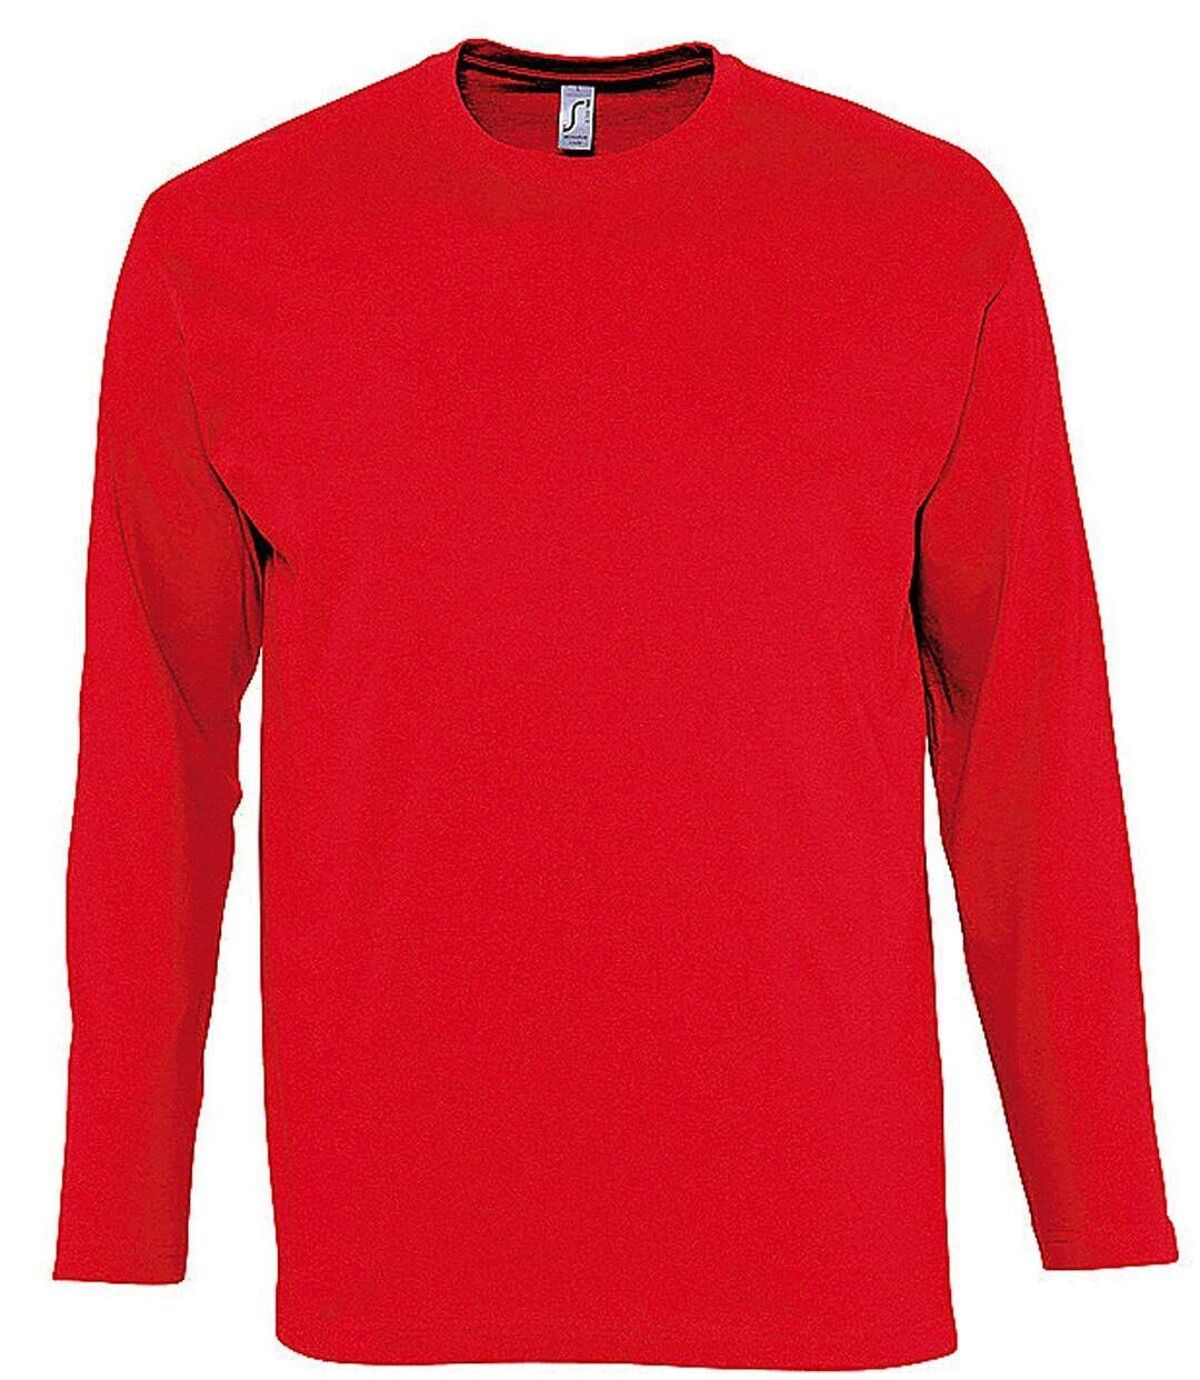 T-shirt manches longues HOMME - 11420 - rouge